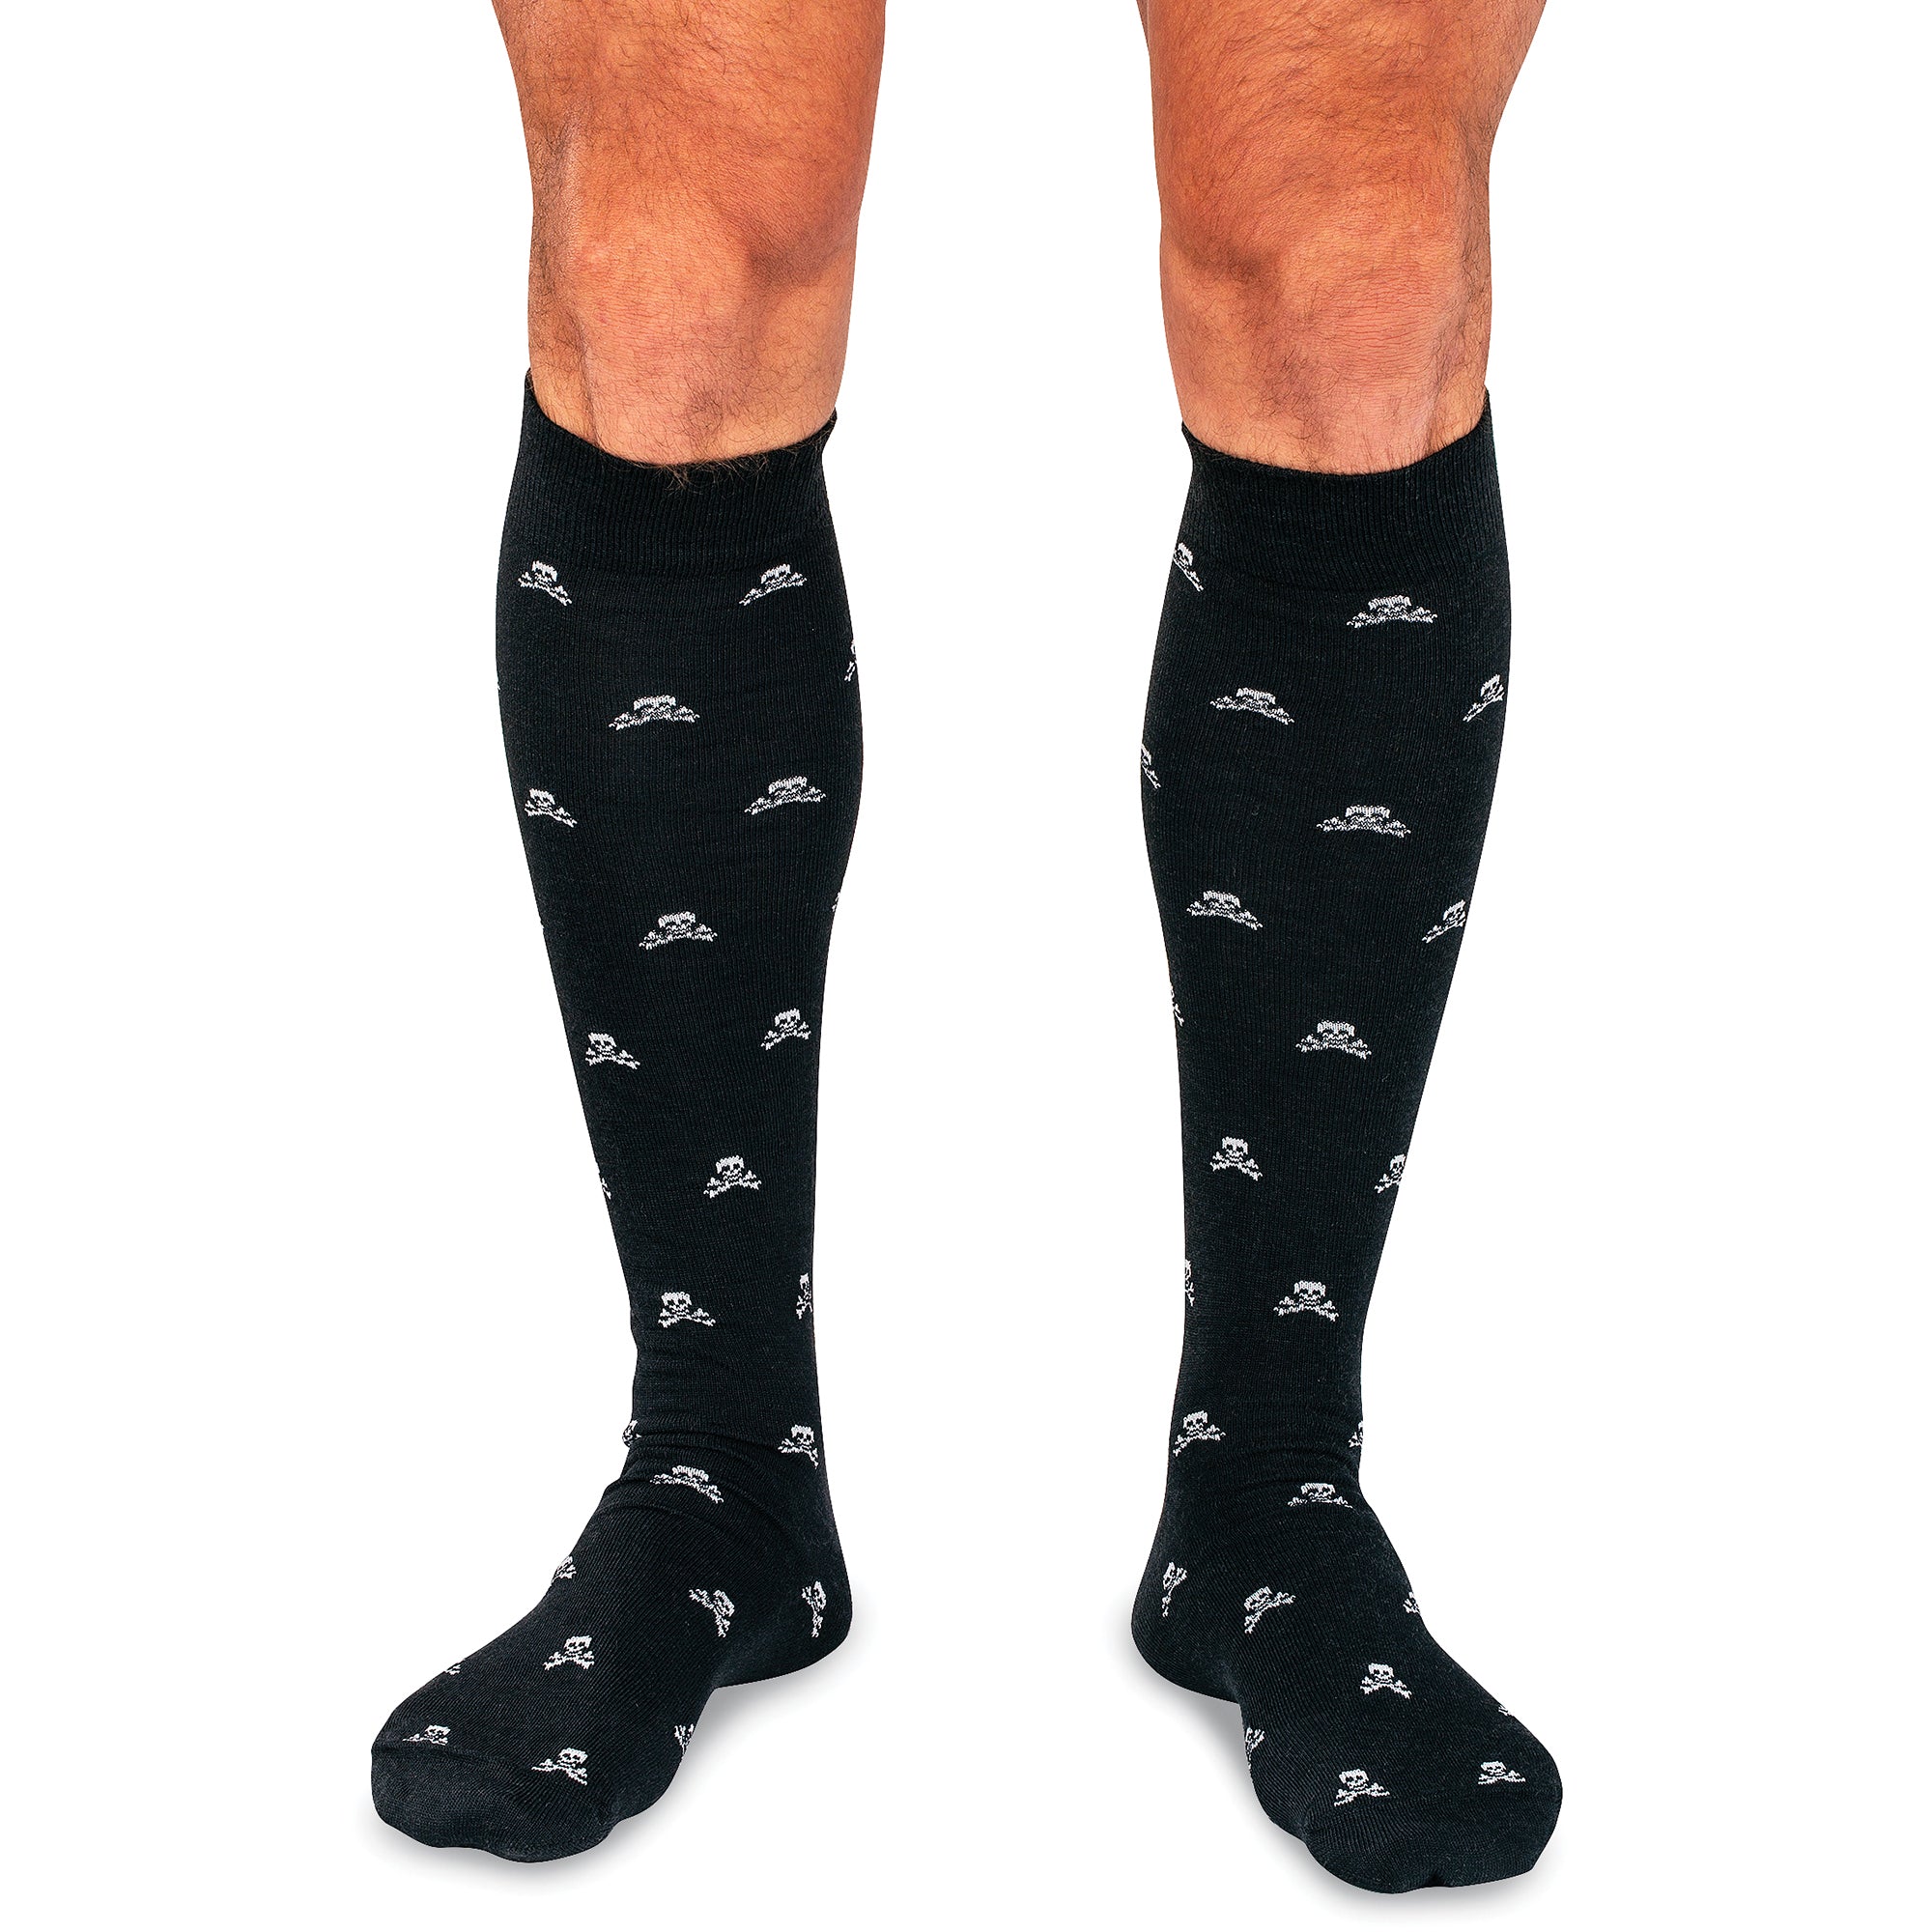 Skull Dress Socks Over The Calf | Merino Wool Knee High Dress Socks with Jolly Roger | Made in USA by Boardroom Socks